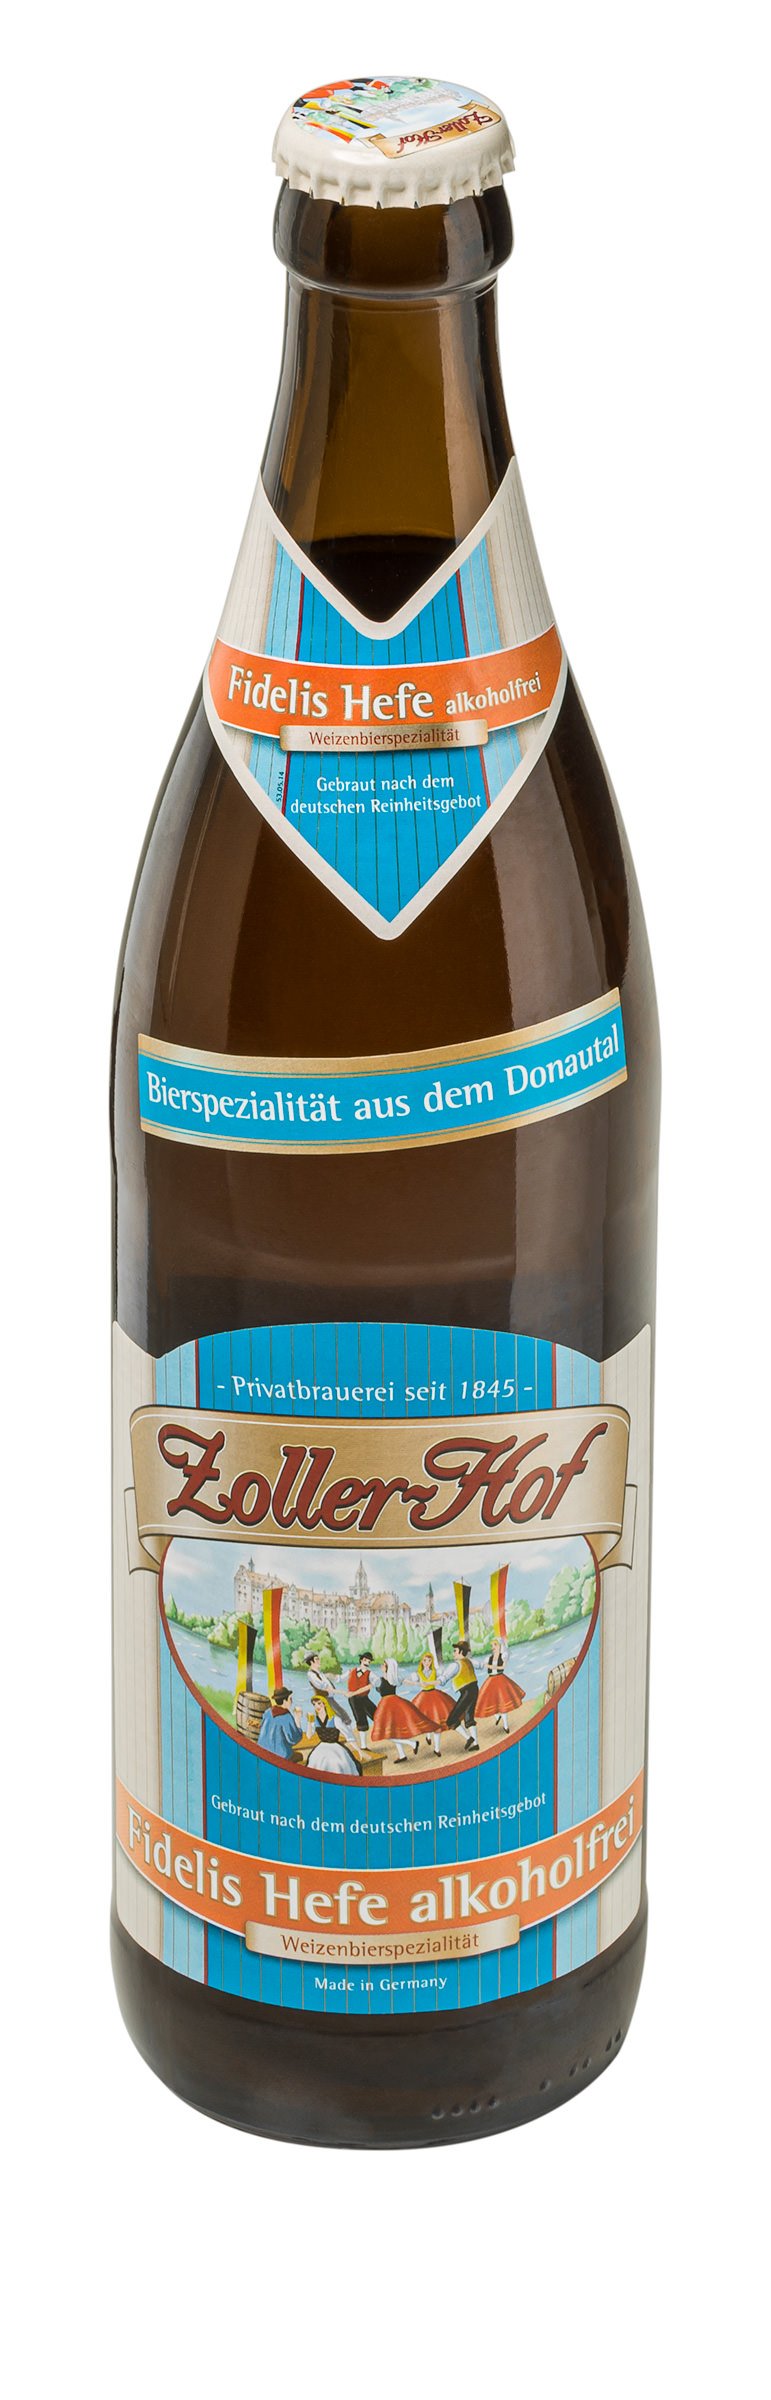 Fidelis Hefe alkoholfrei, Brauerei Zoller-Hof